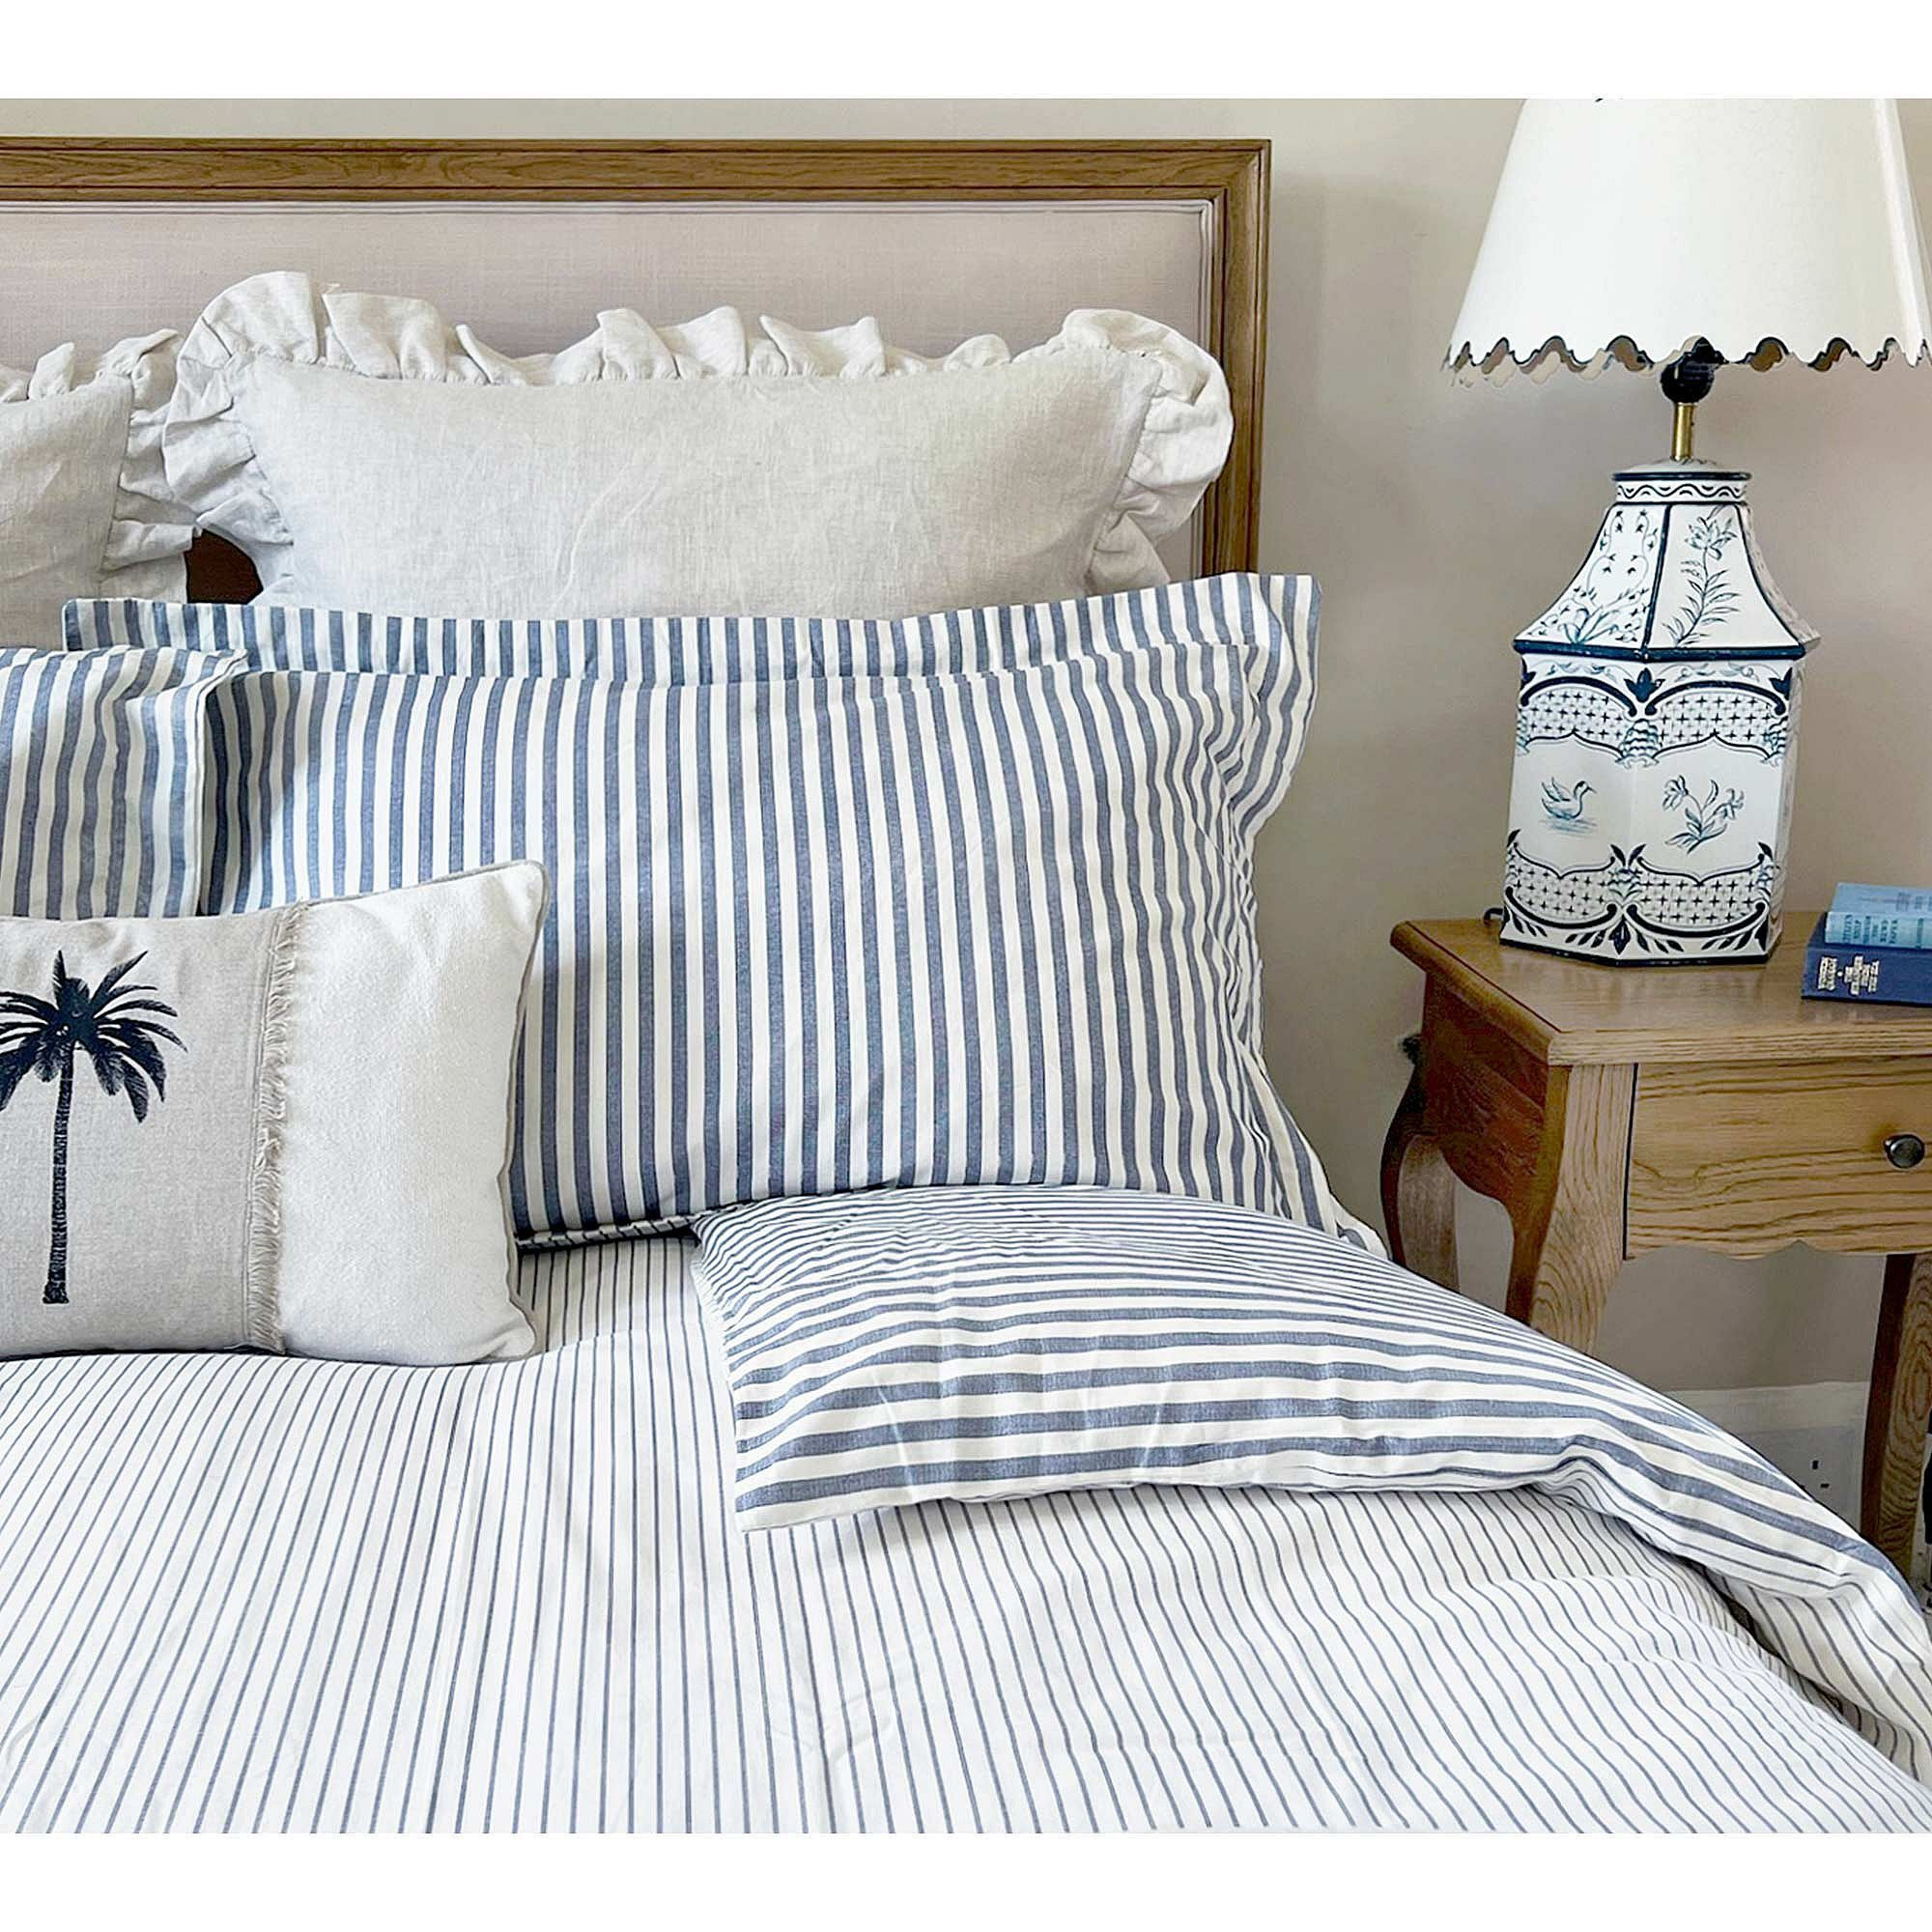 Petit Breton Stripe Bed Linen Set in Sea Blue (Double Set) - image 1